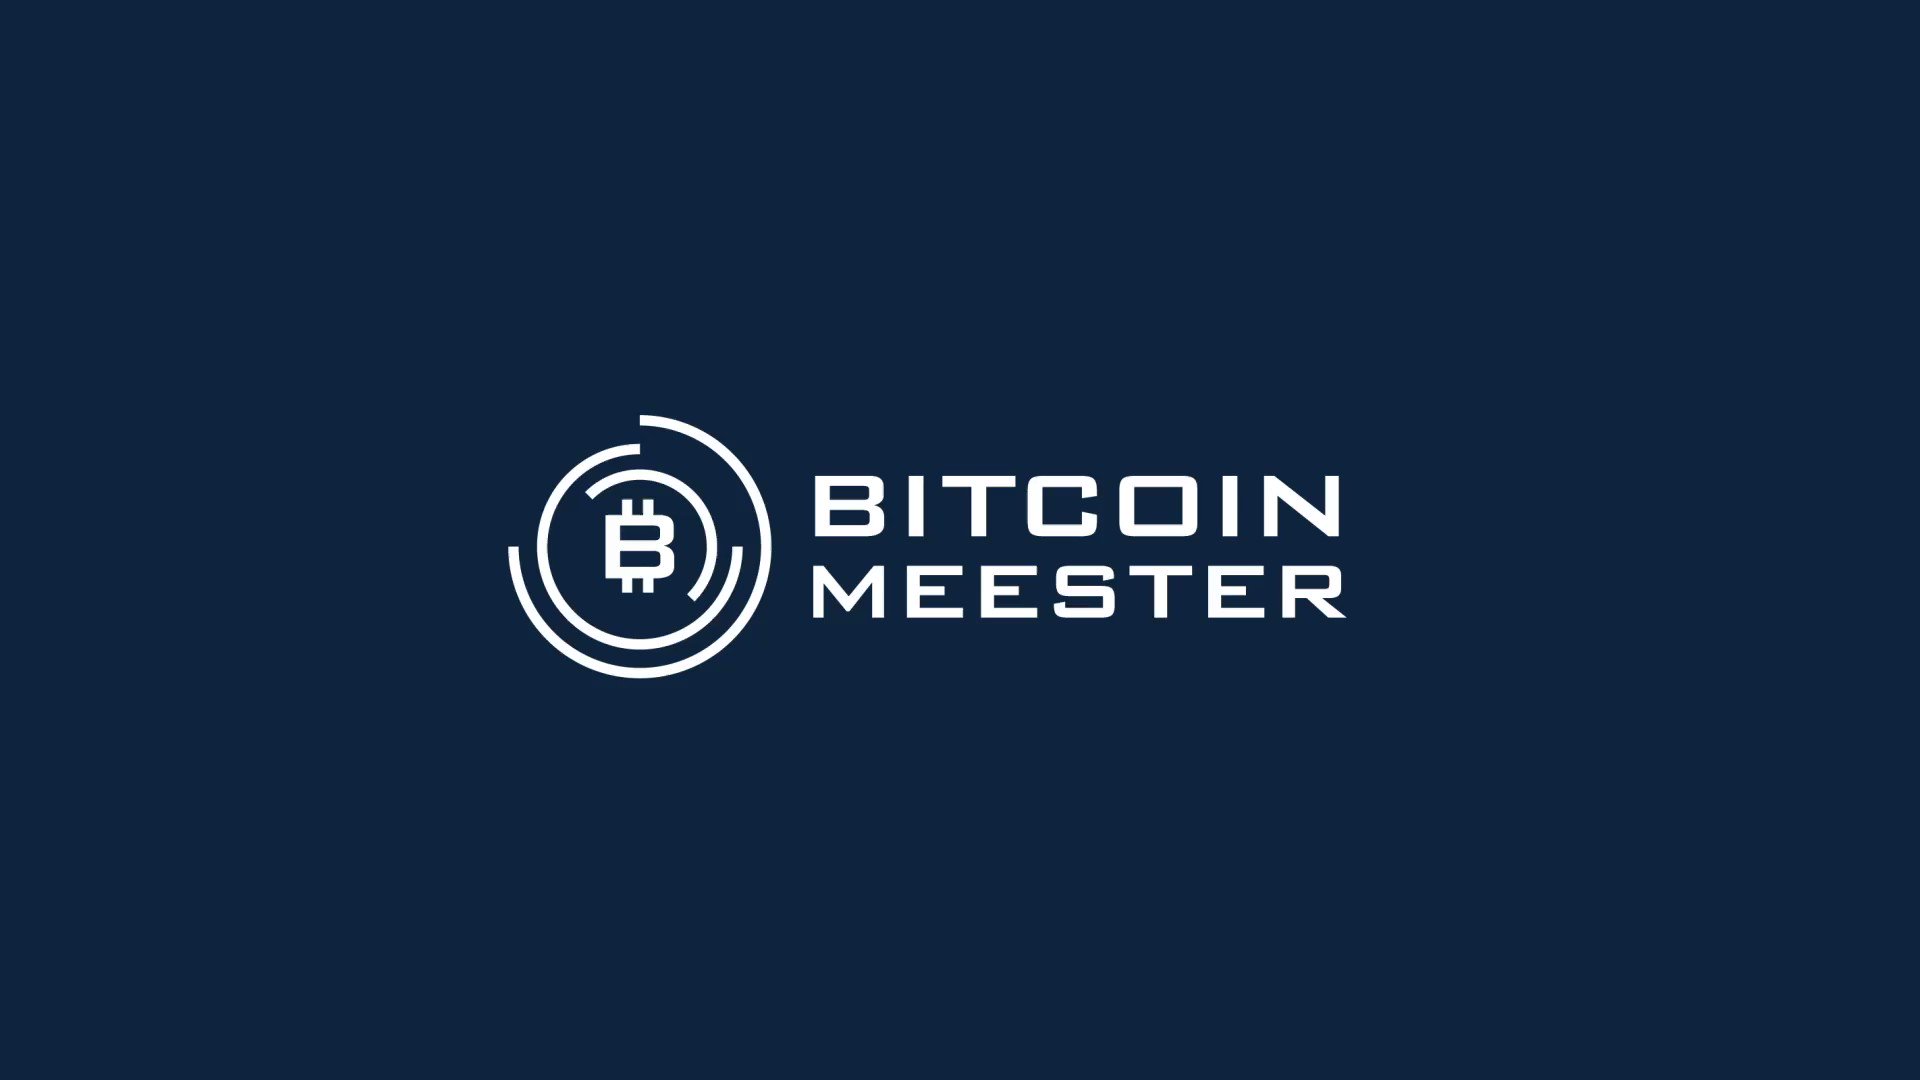 Bitcoin Matrix Adam Meister interview! Catastrophizing, Luxury Beliefs, The Victimization Crowd, Ethereum, Travel, MUCH MORE!